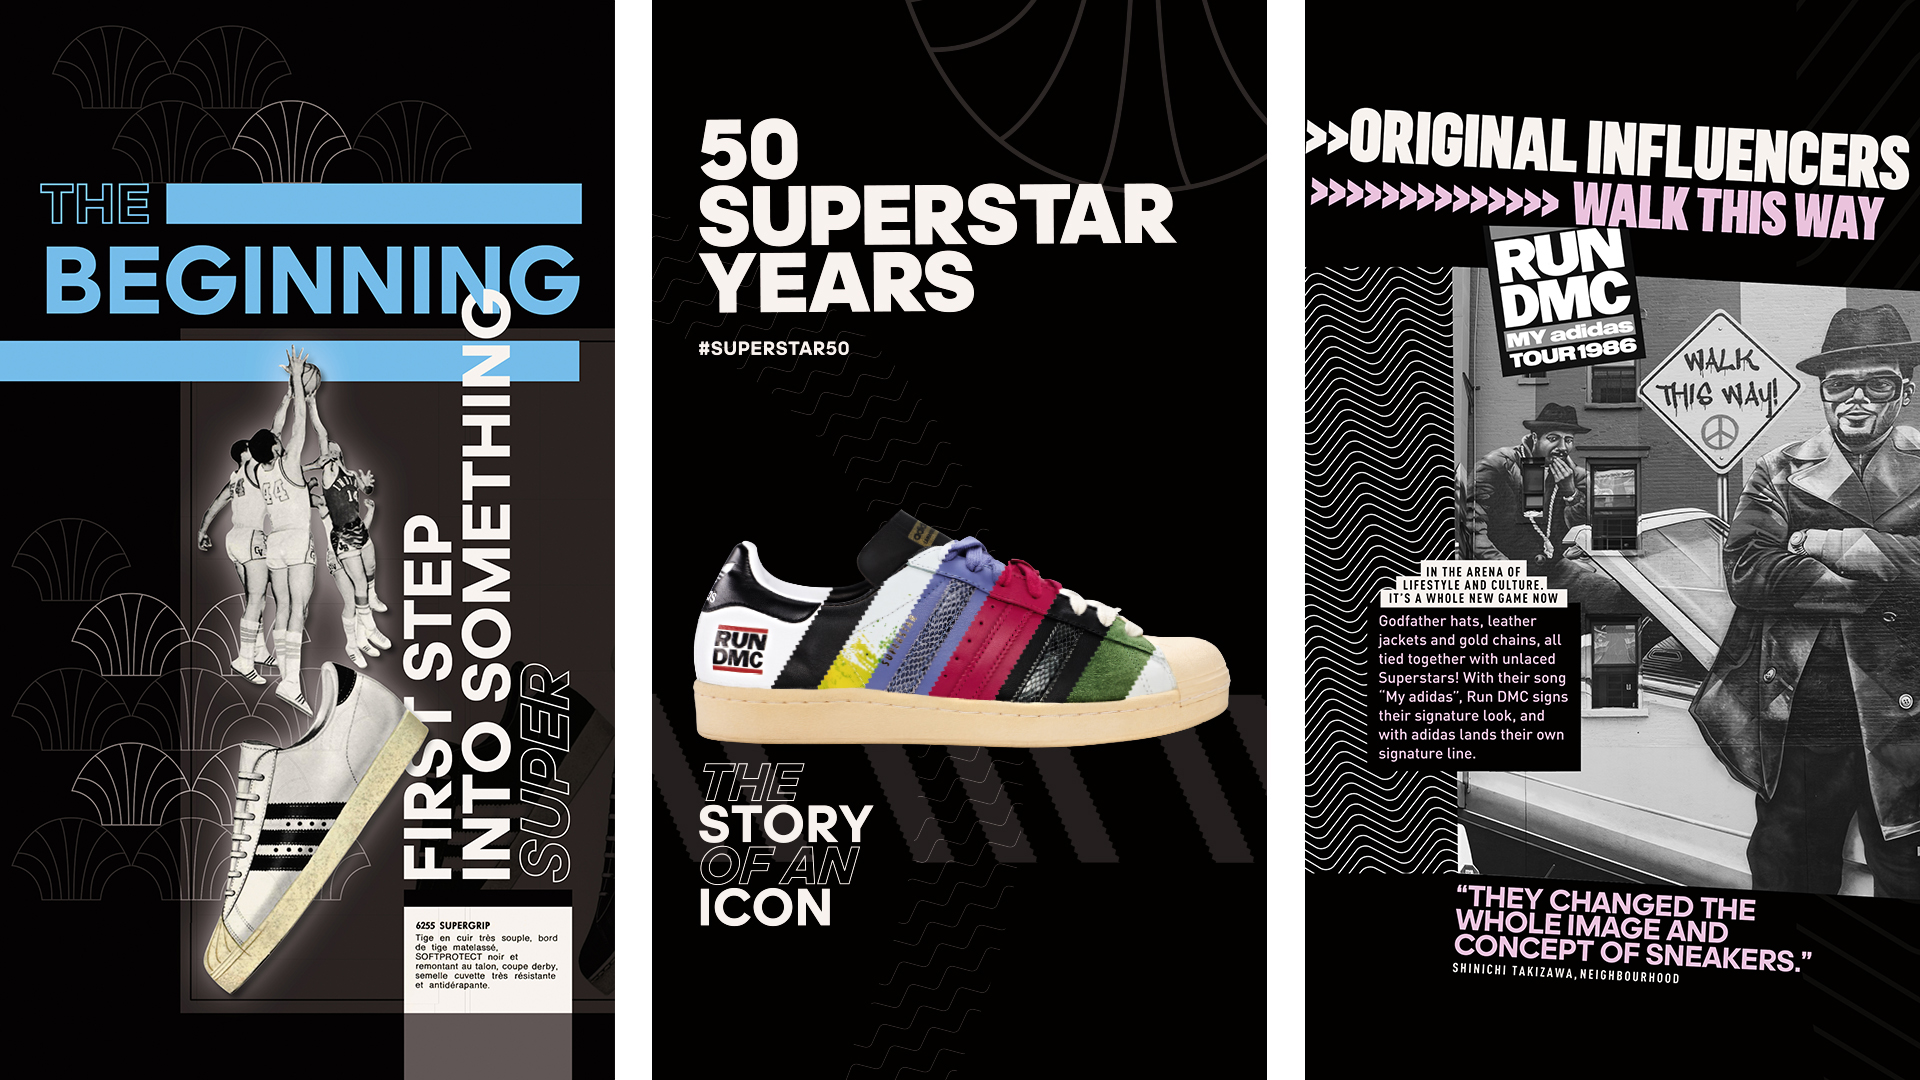 Marquesina Persona australiana nombre de la marca adidas - 50 years of superstars - D'art Design Gruppe